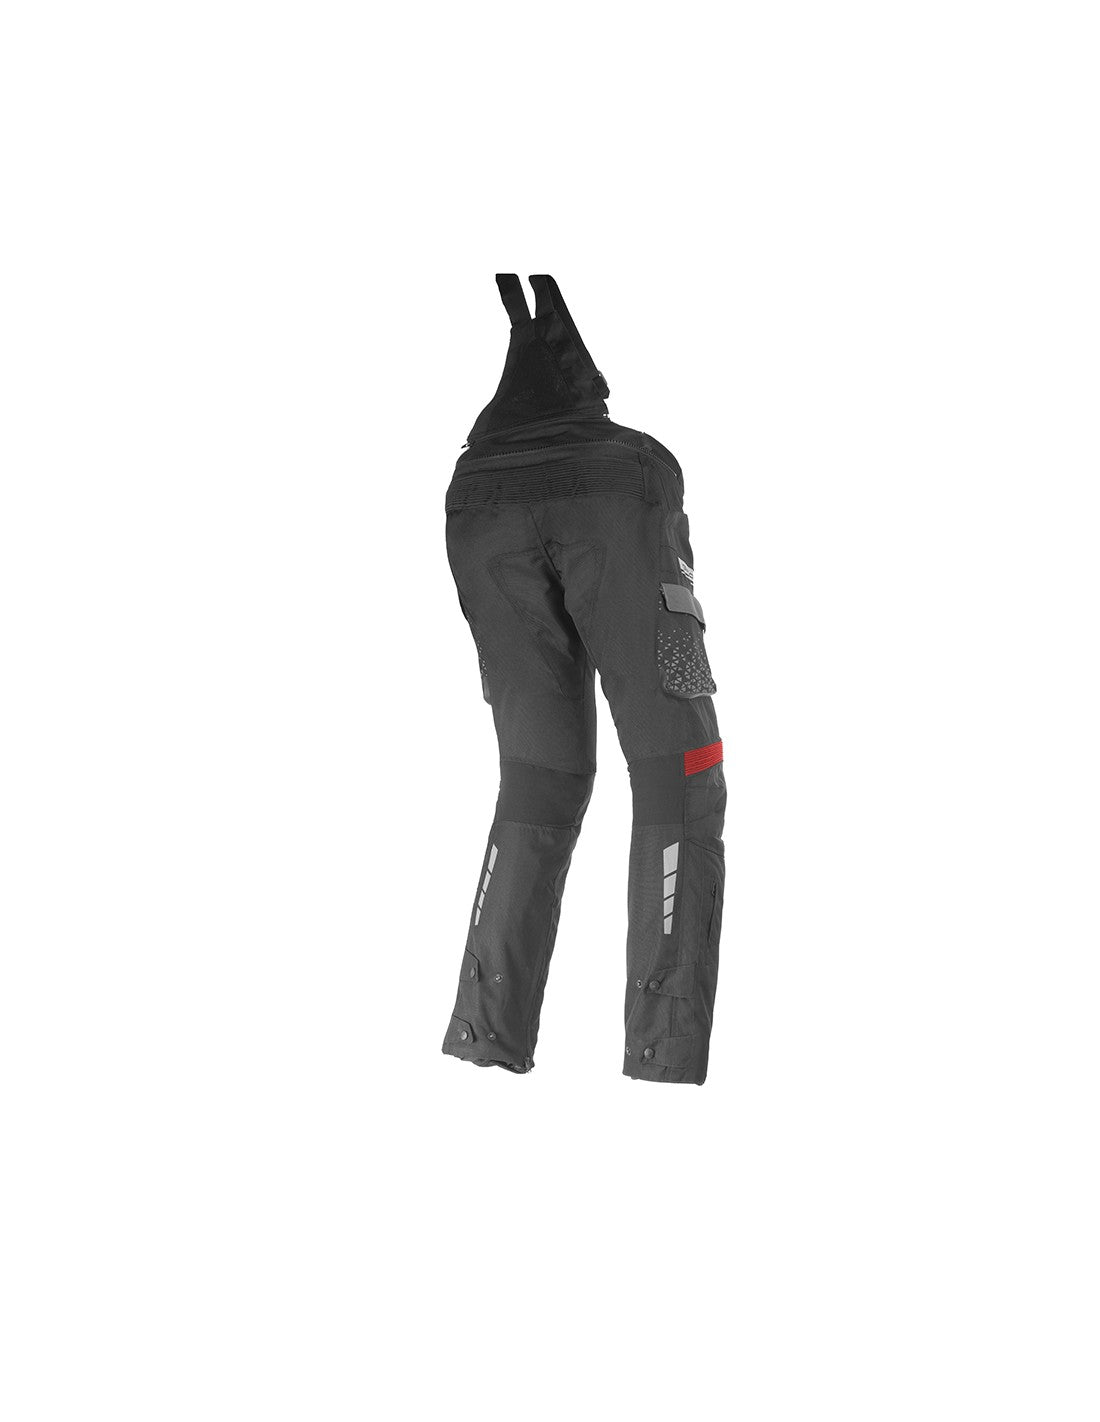 Bela Crossroad Extreme WP Pantaloni in tessuto impermeabile Nero/Antracite/Rosso